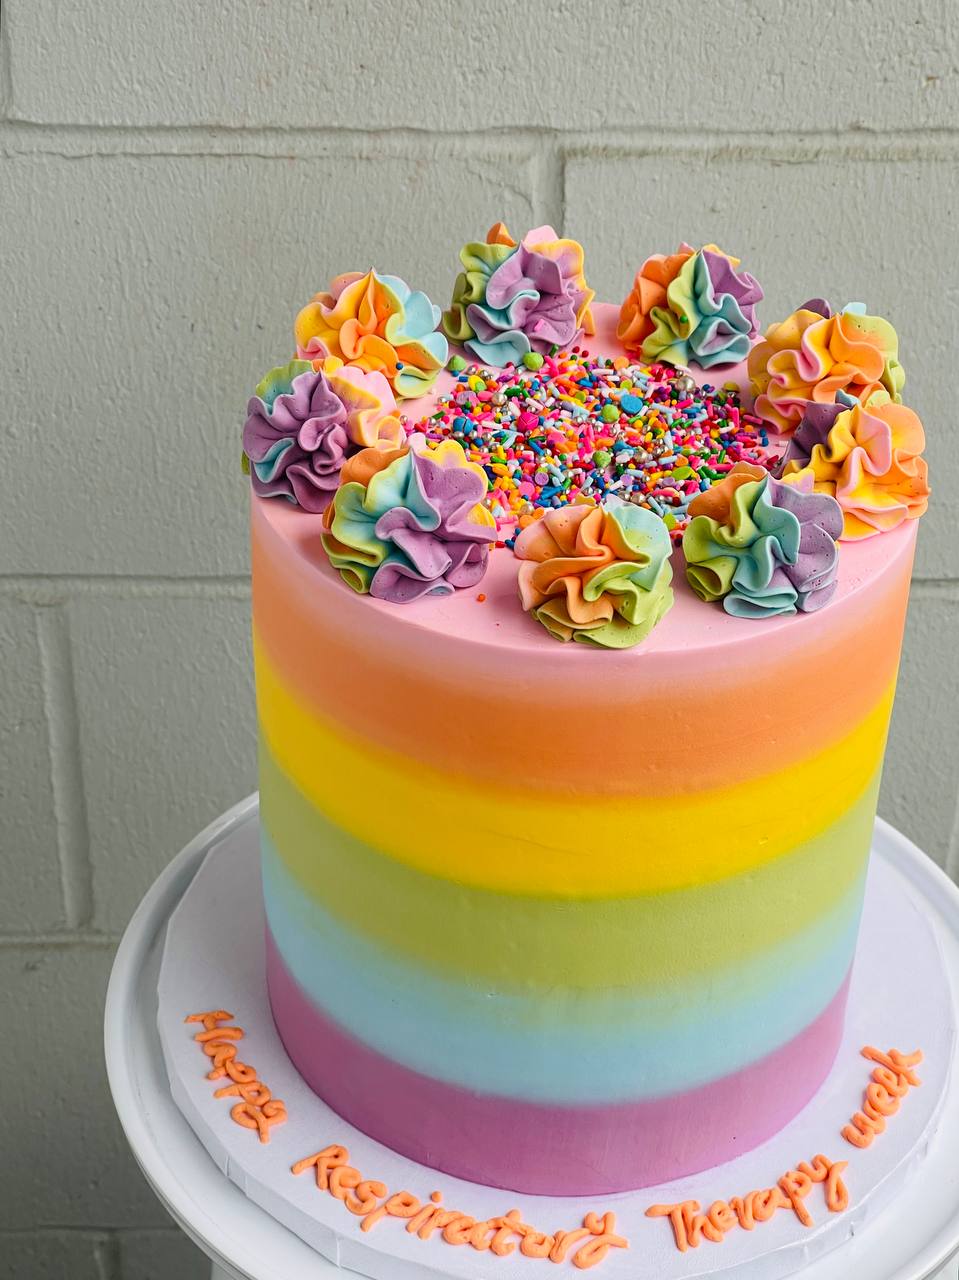 The Rainbow cake